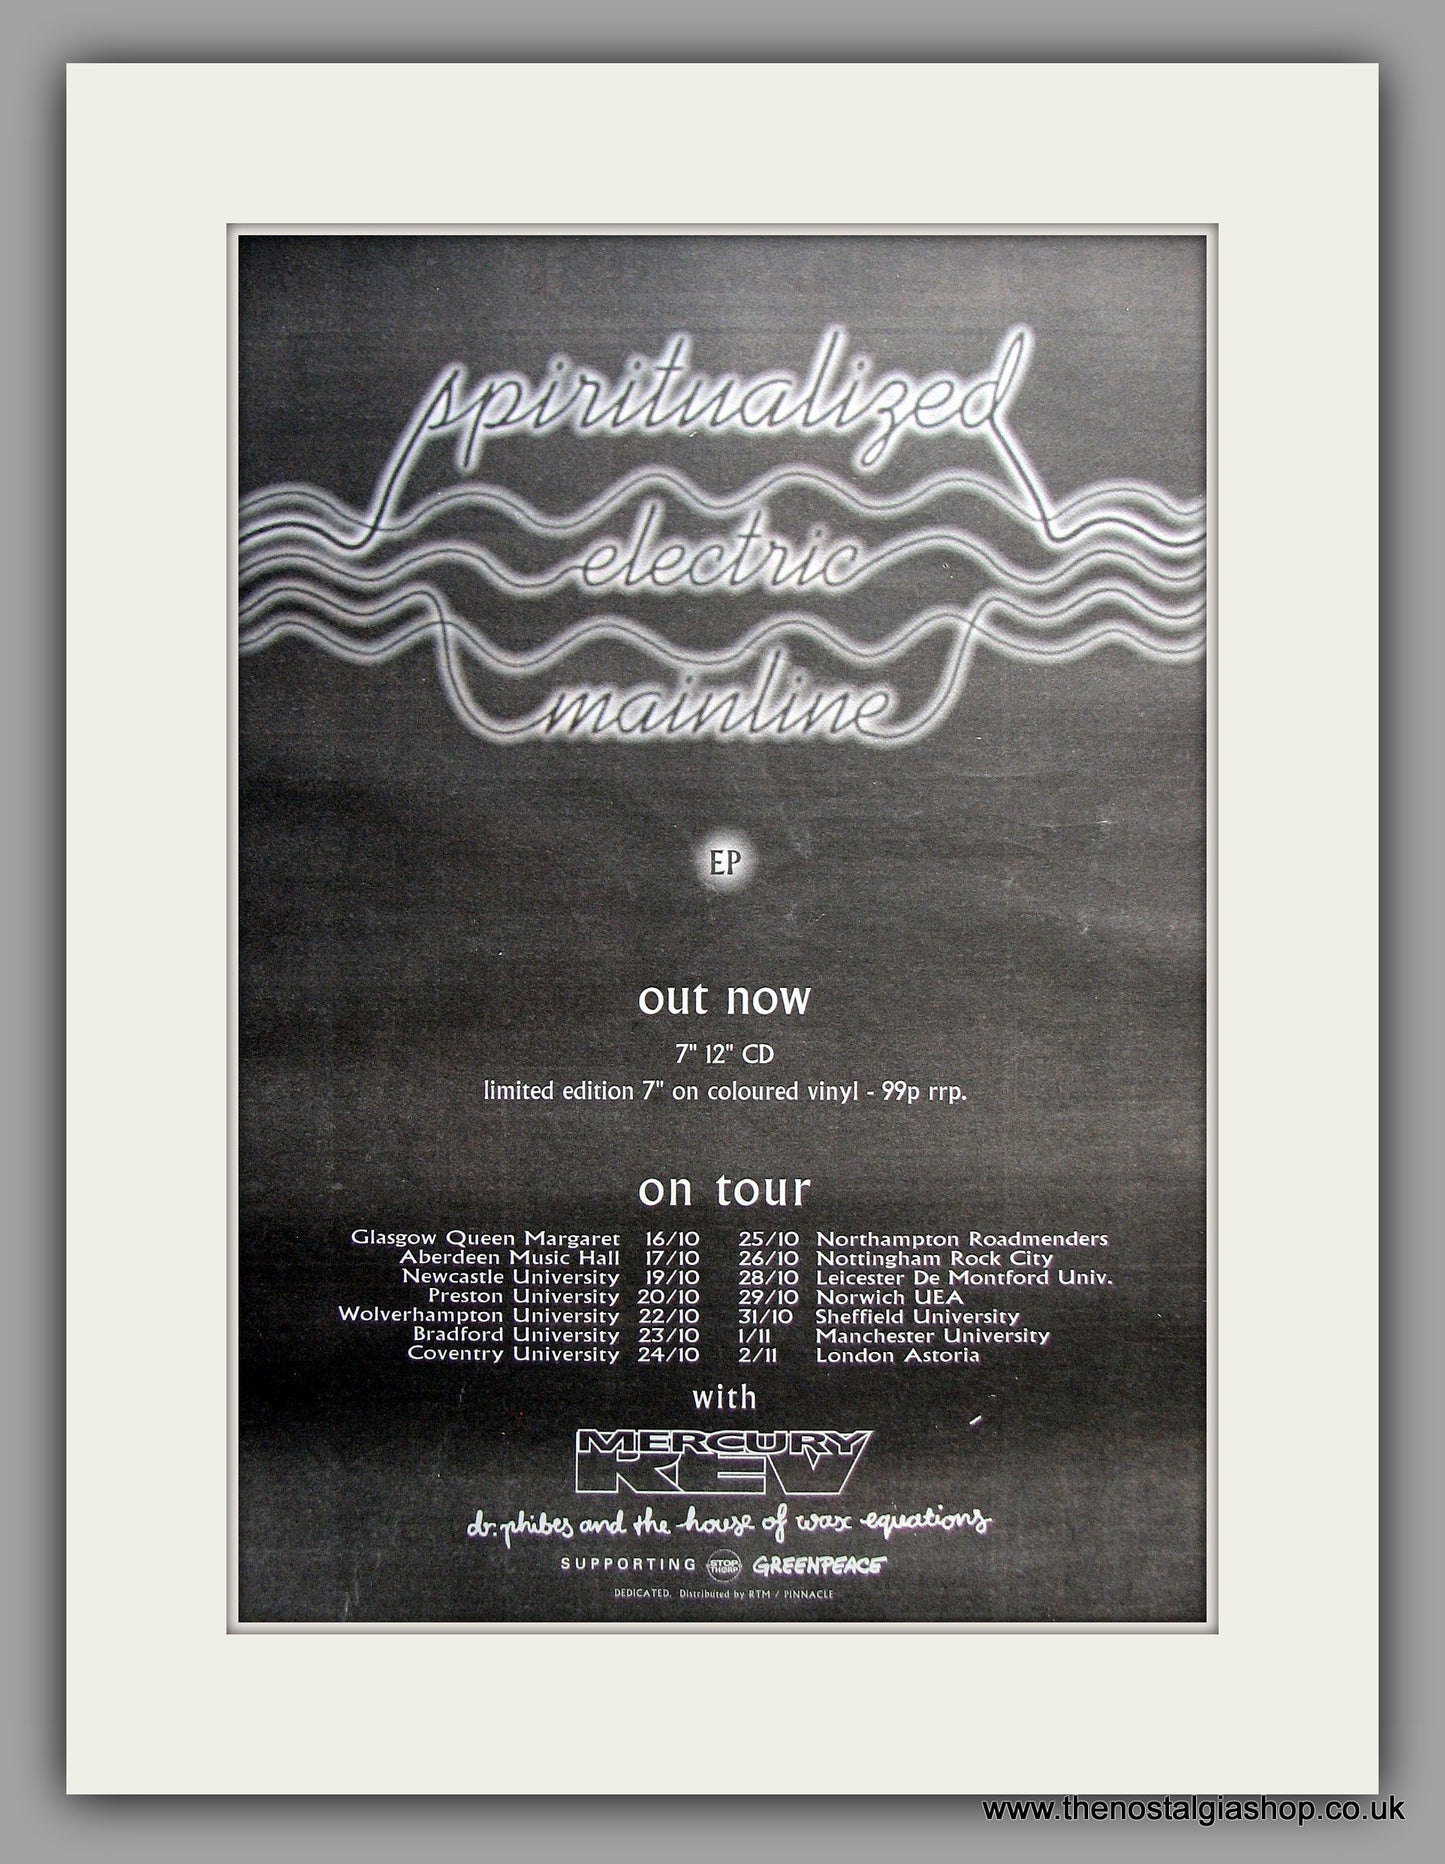 Spiritualized Electric Mainline - Tour Dates. Original Vintage Advert 1993 (ref AD11112)